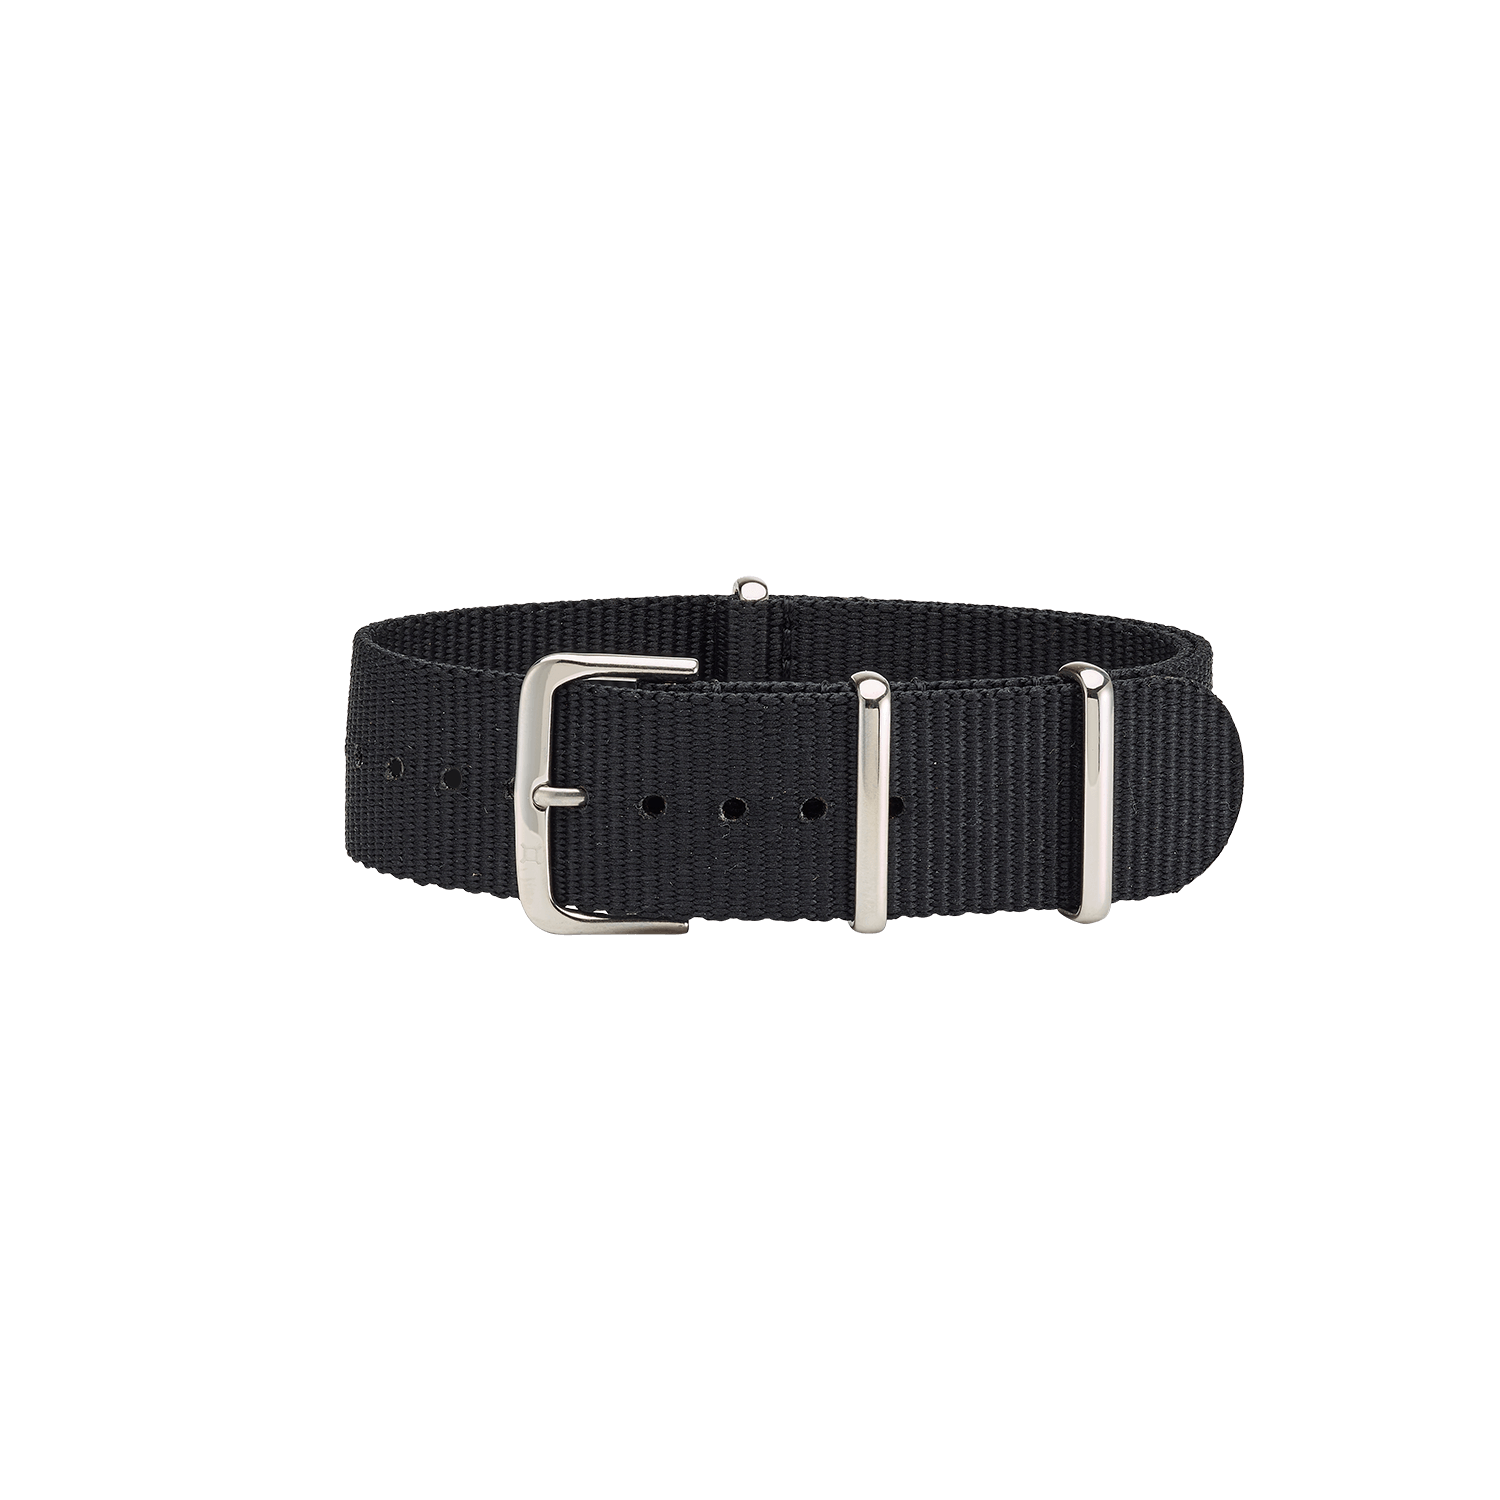 Nato strap watch in black, light beige, and light grey.